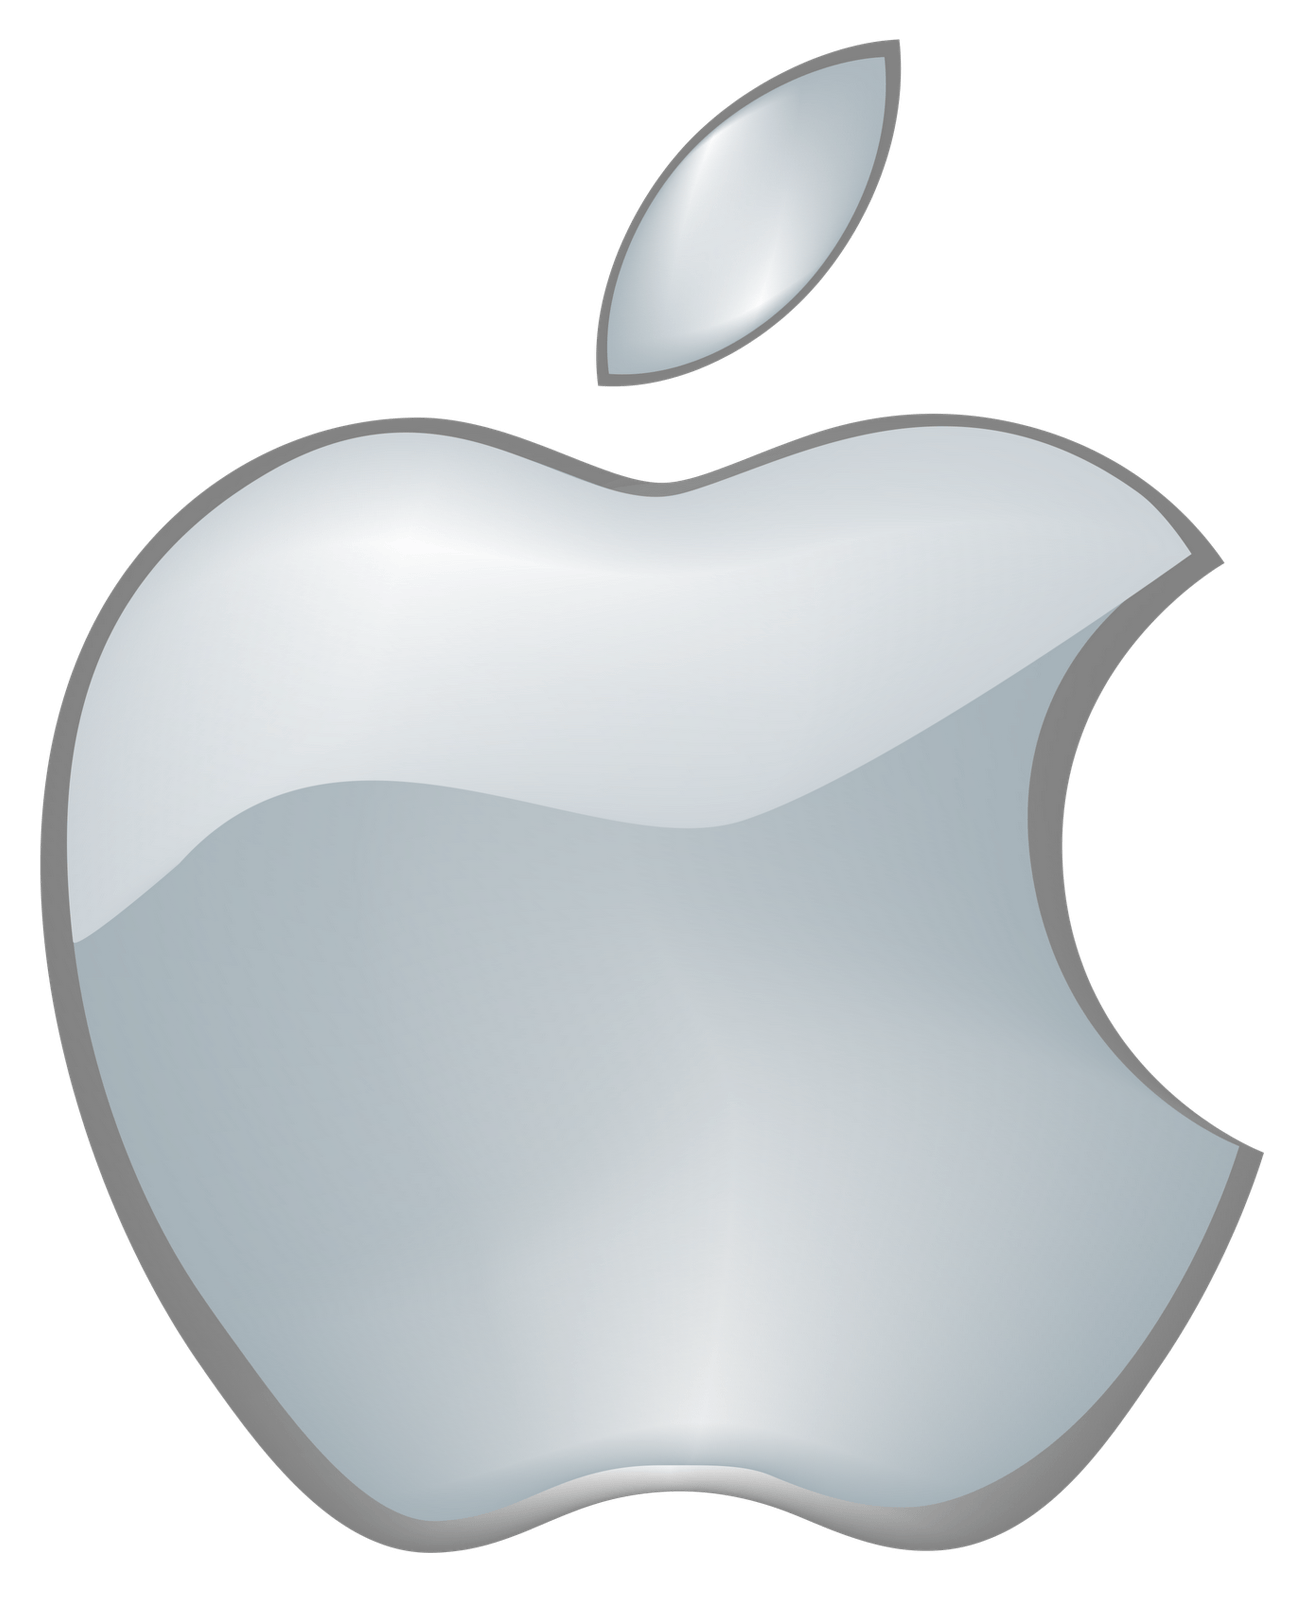 iPhone Apple Logo - Apple logo PNG images free download